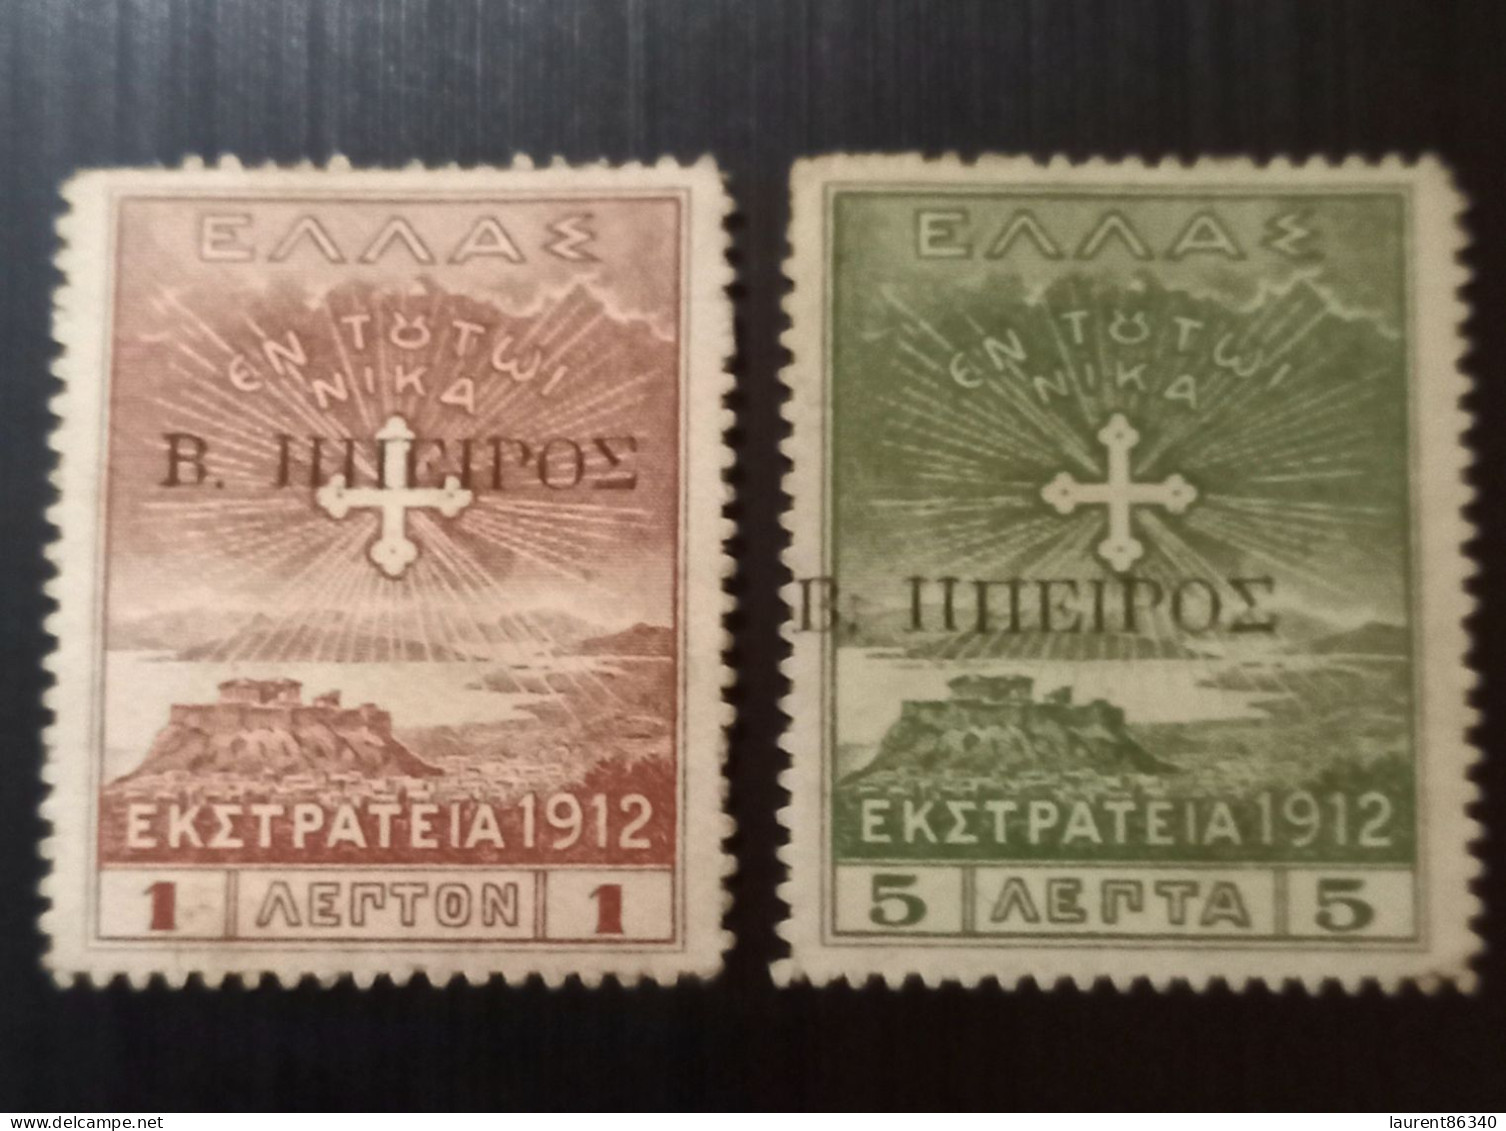 Grèce 1914 Épire Du Nord Occupation Surcharge " Β. ΗΠΕΙΡΟΣ "1915 Greek Postage Stamps Of 1913 Overprinted "B. HΠΕΙΡΟΣ - Epirus & Albania